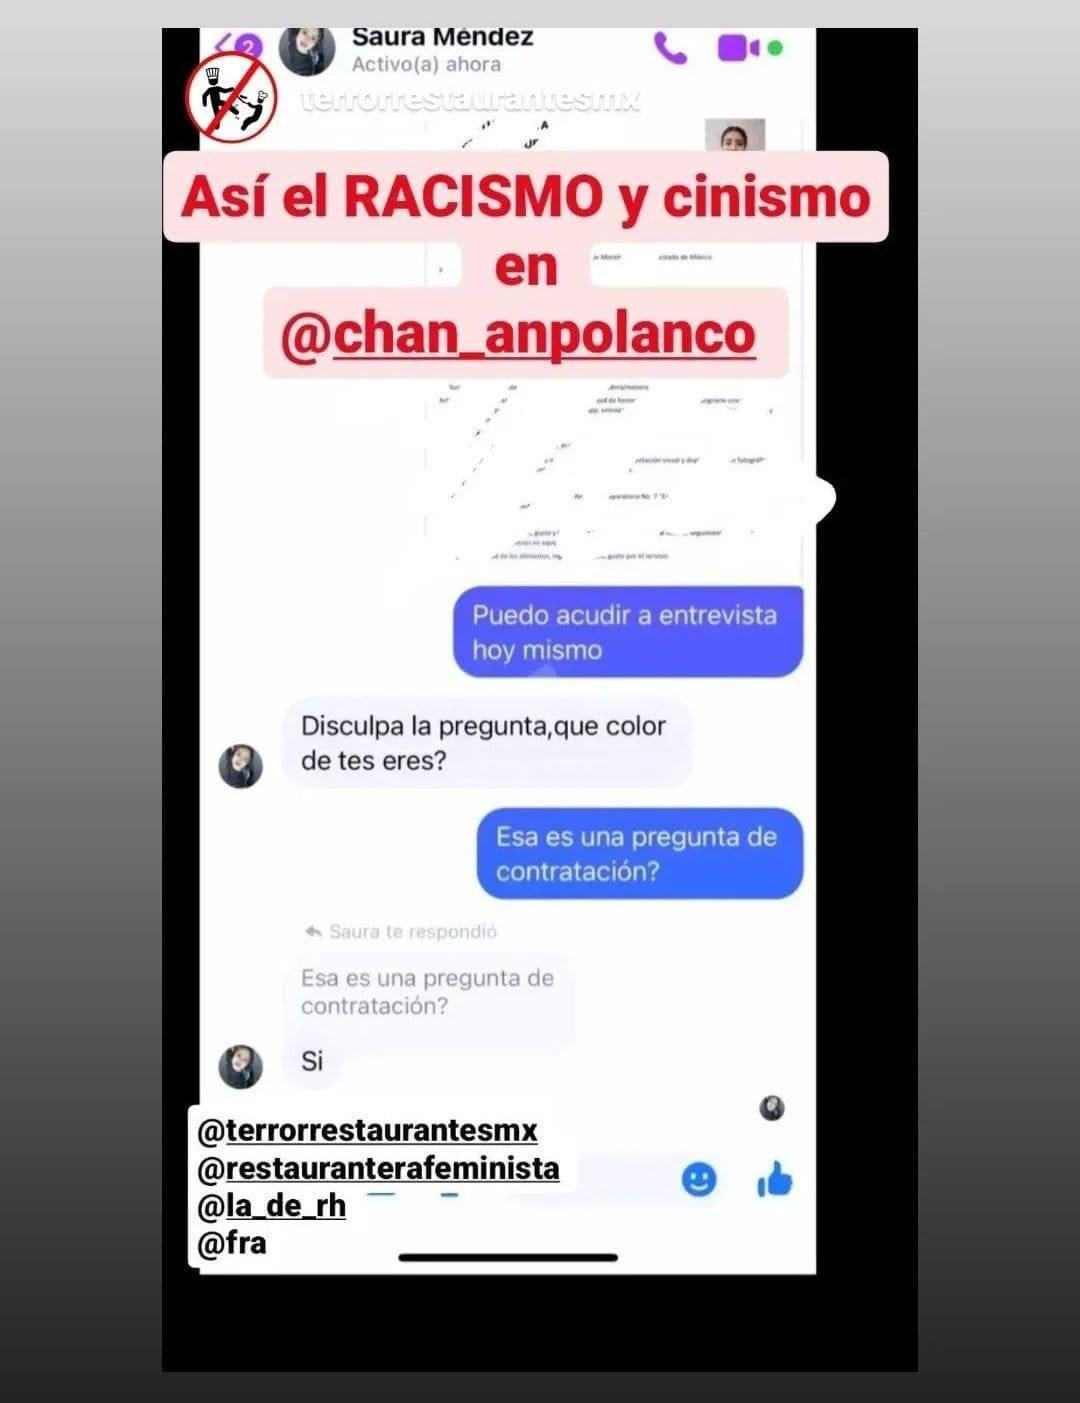 Restaurantes racistas en México causan indignación en redes sociales.